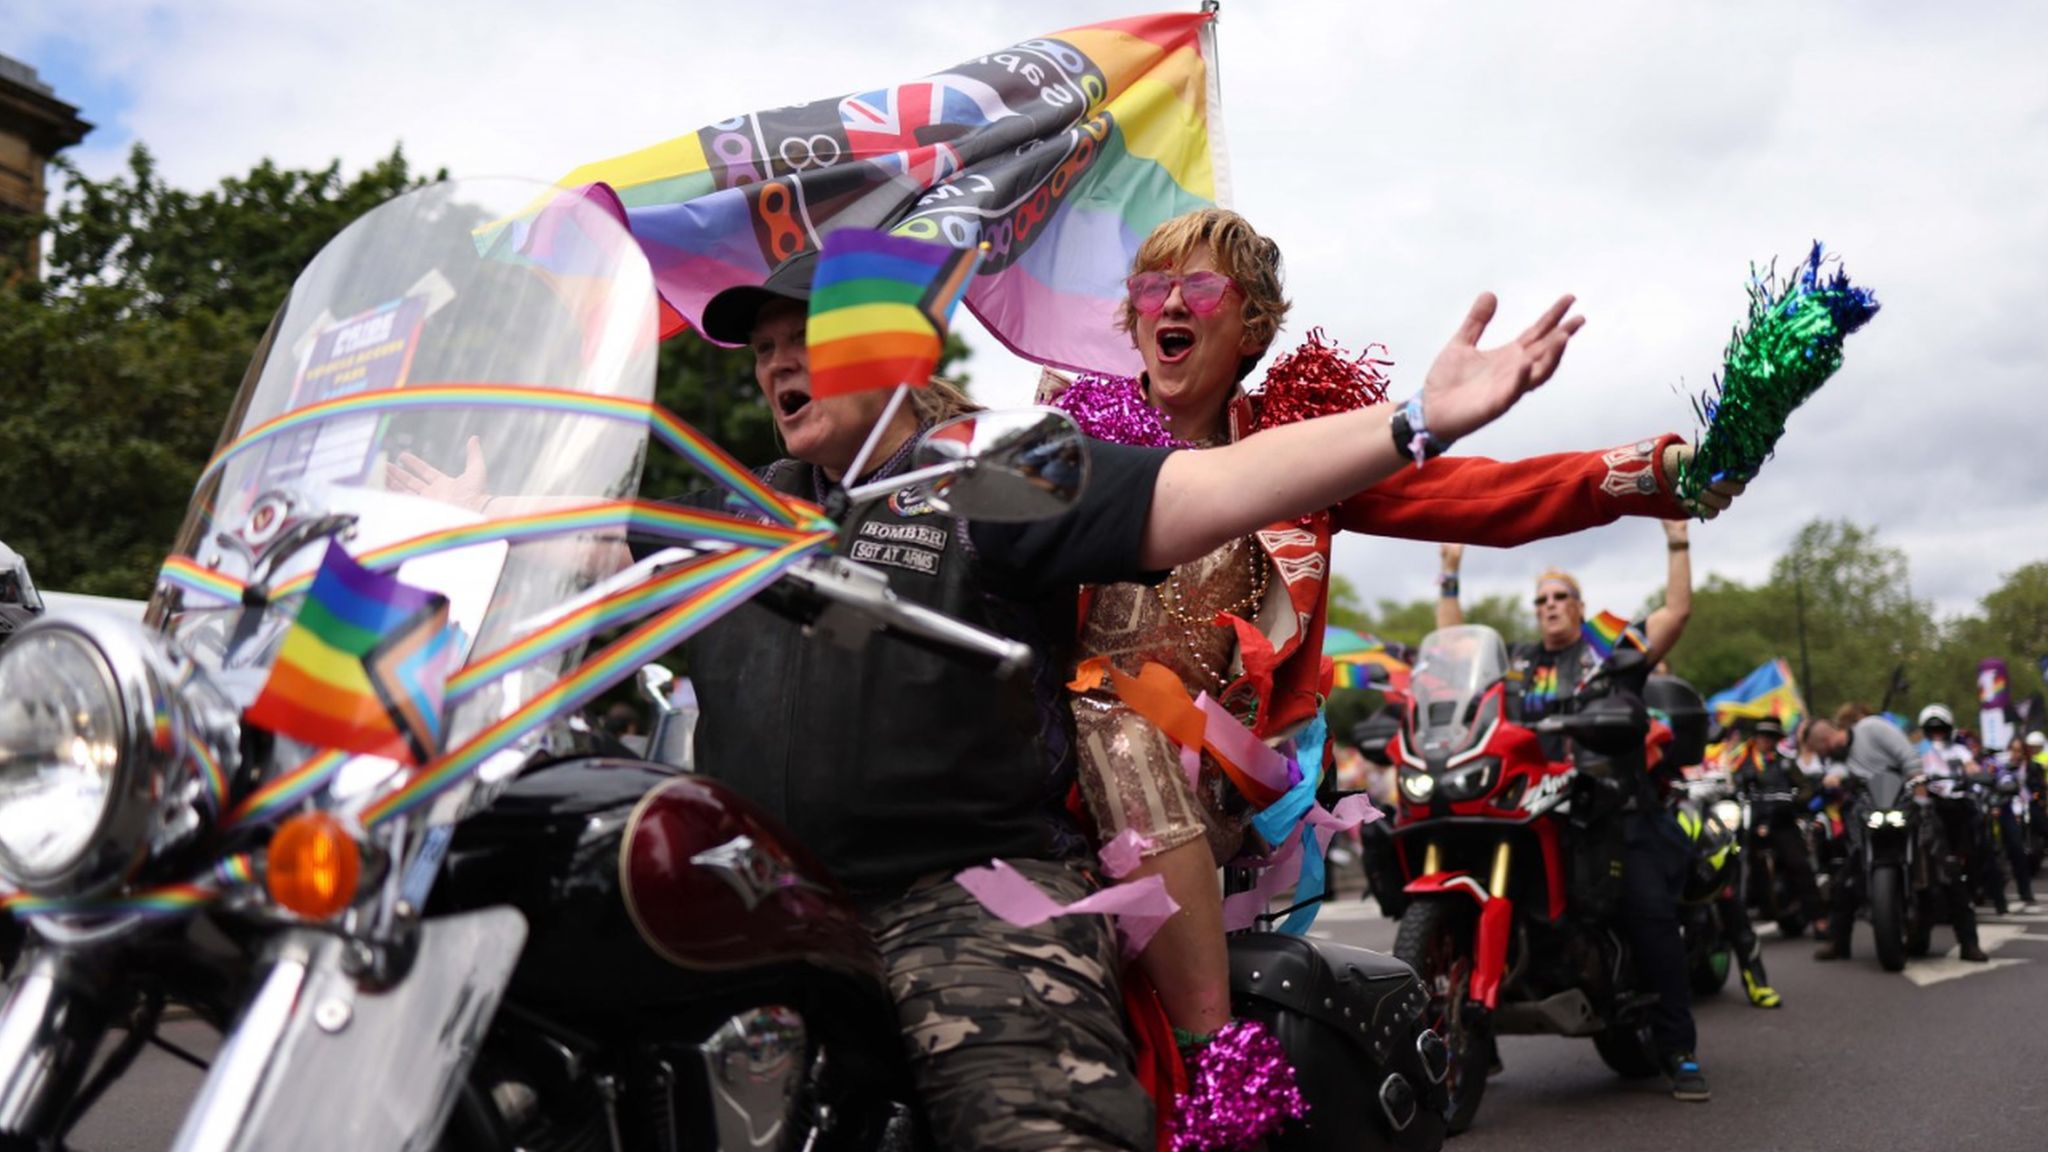 Motorbikes pass through central London during Pride parade